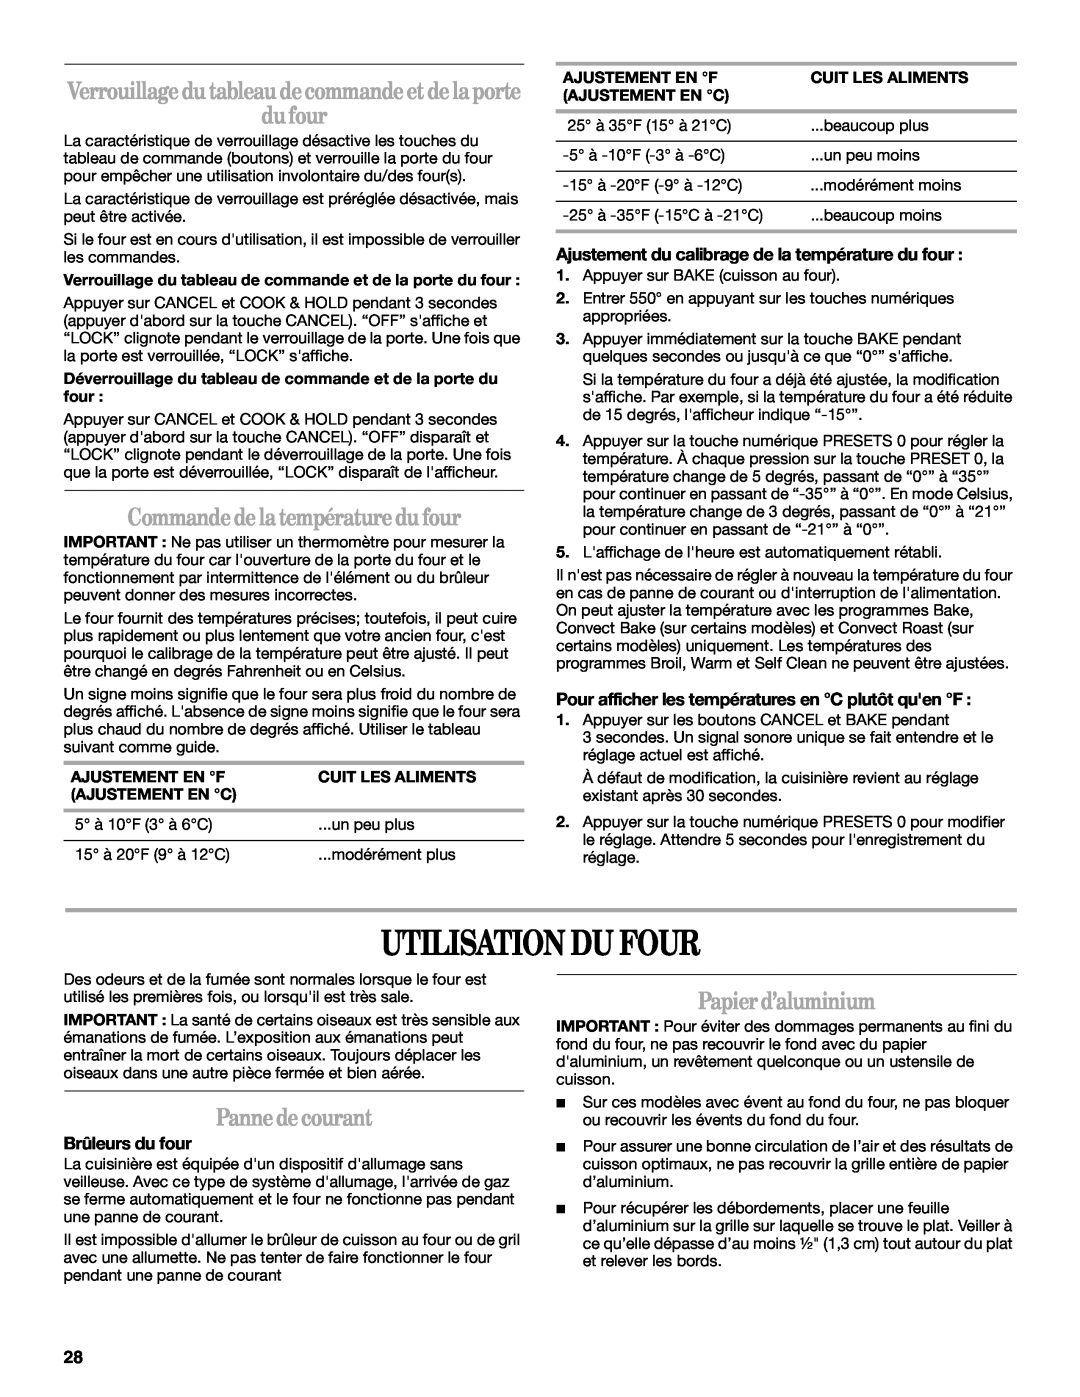 Whirlpool GW397LXU manual Utilisation Du Four, Commandedelatempératuredufour, Papierd’aluminium, Pannedecourant 